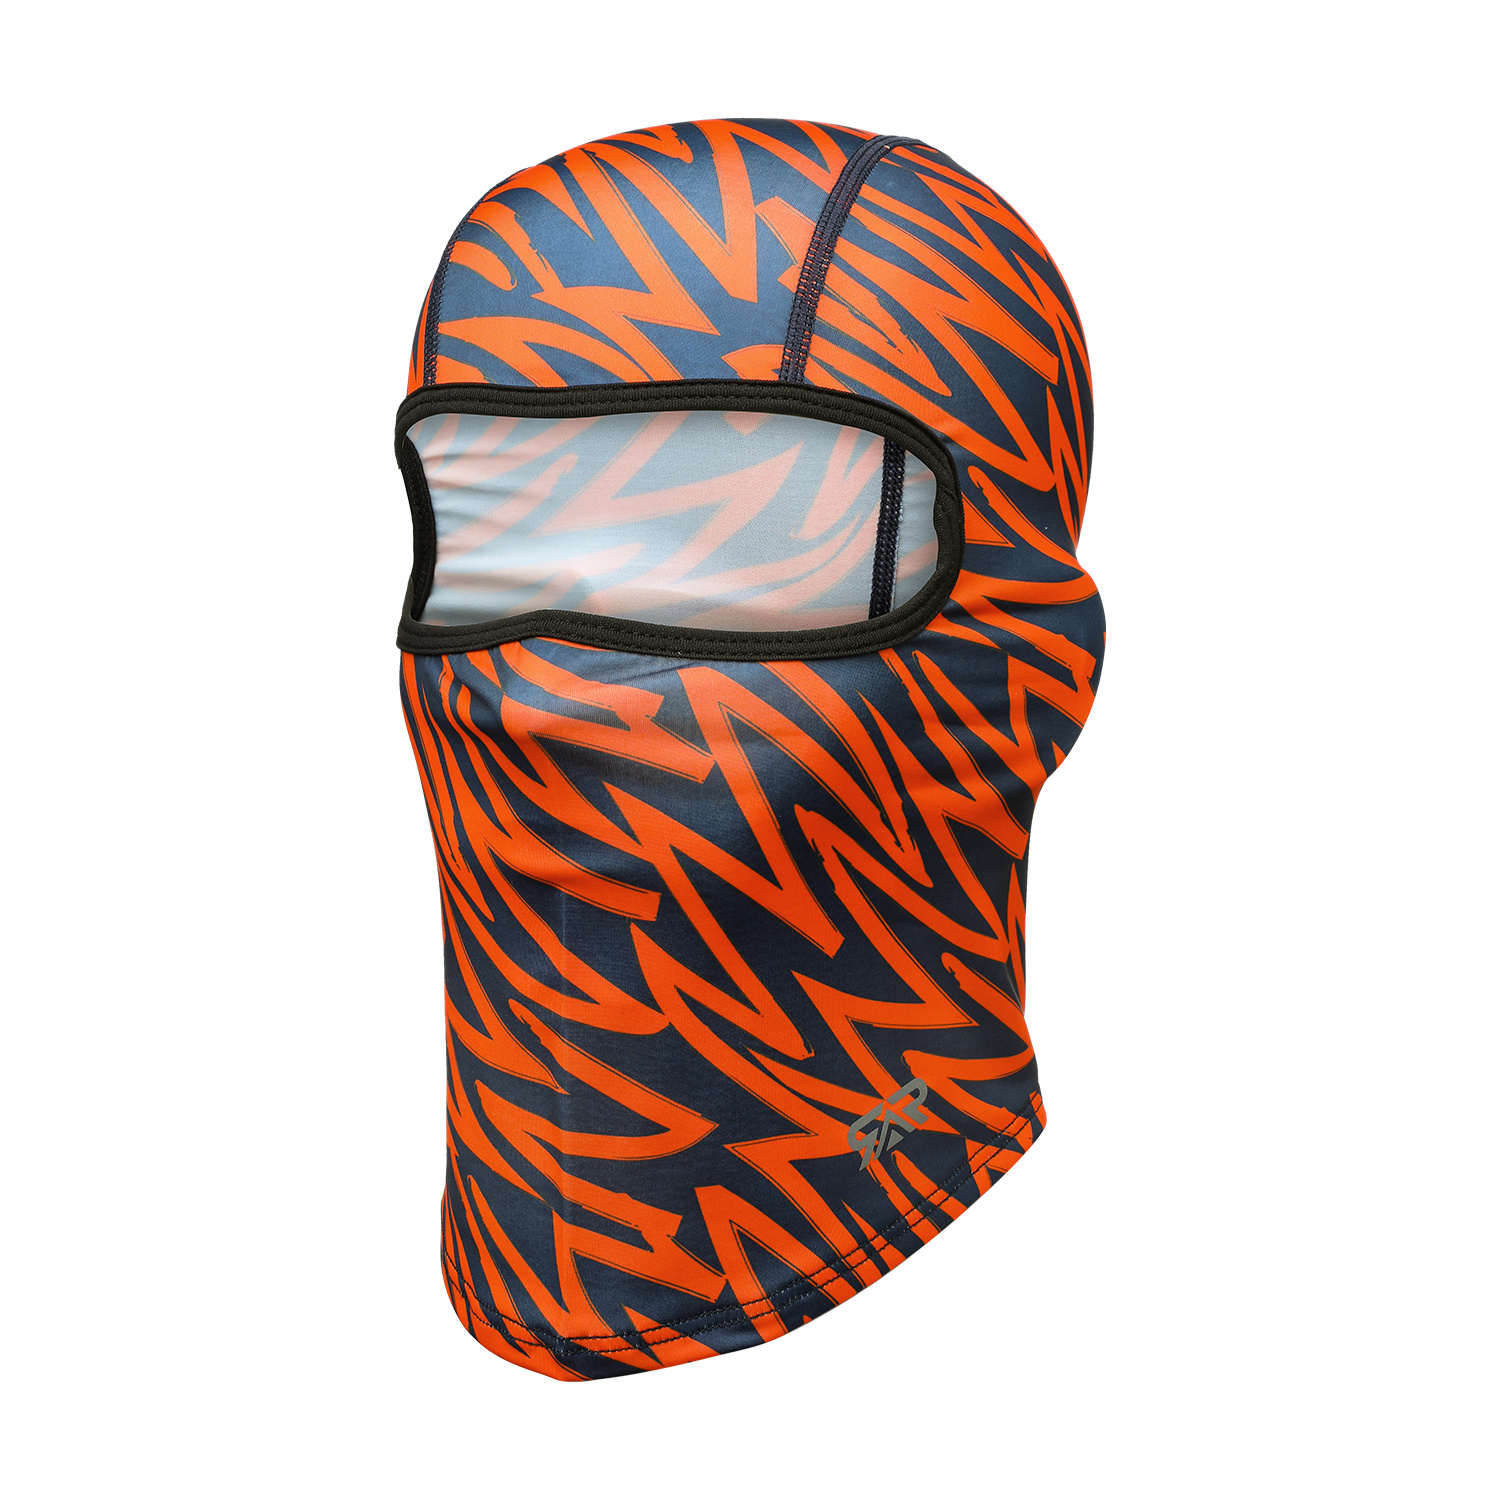 Balaclava Face Mask UPF 50+ UV Protection Ski Sun Hood For Men Women